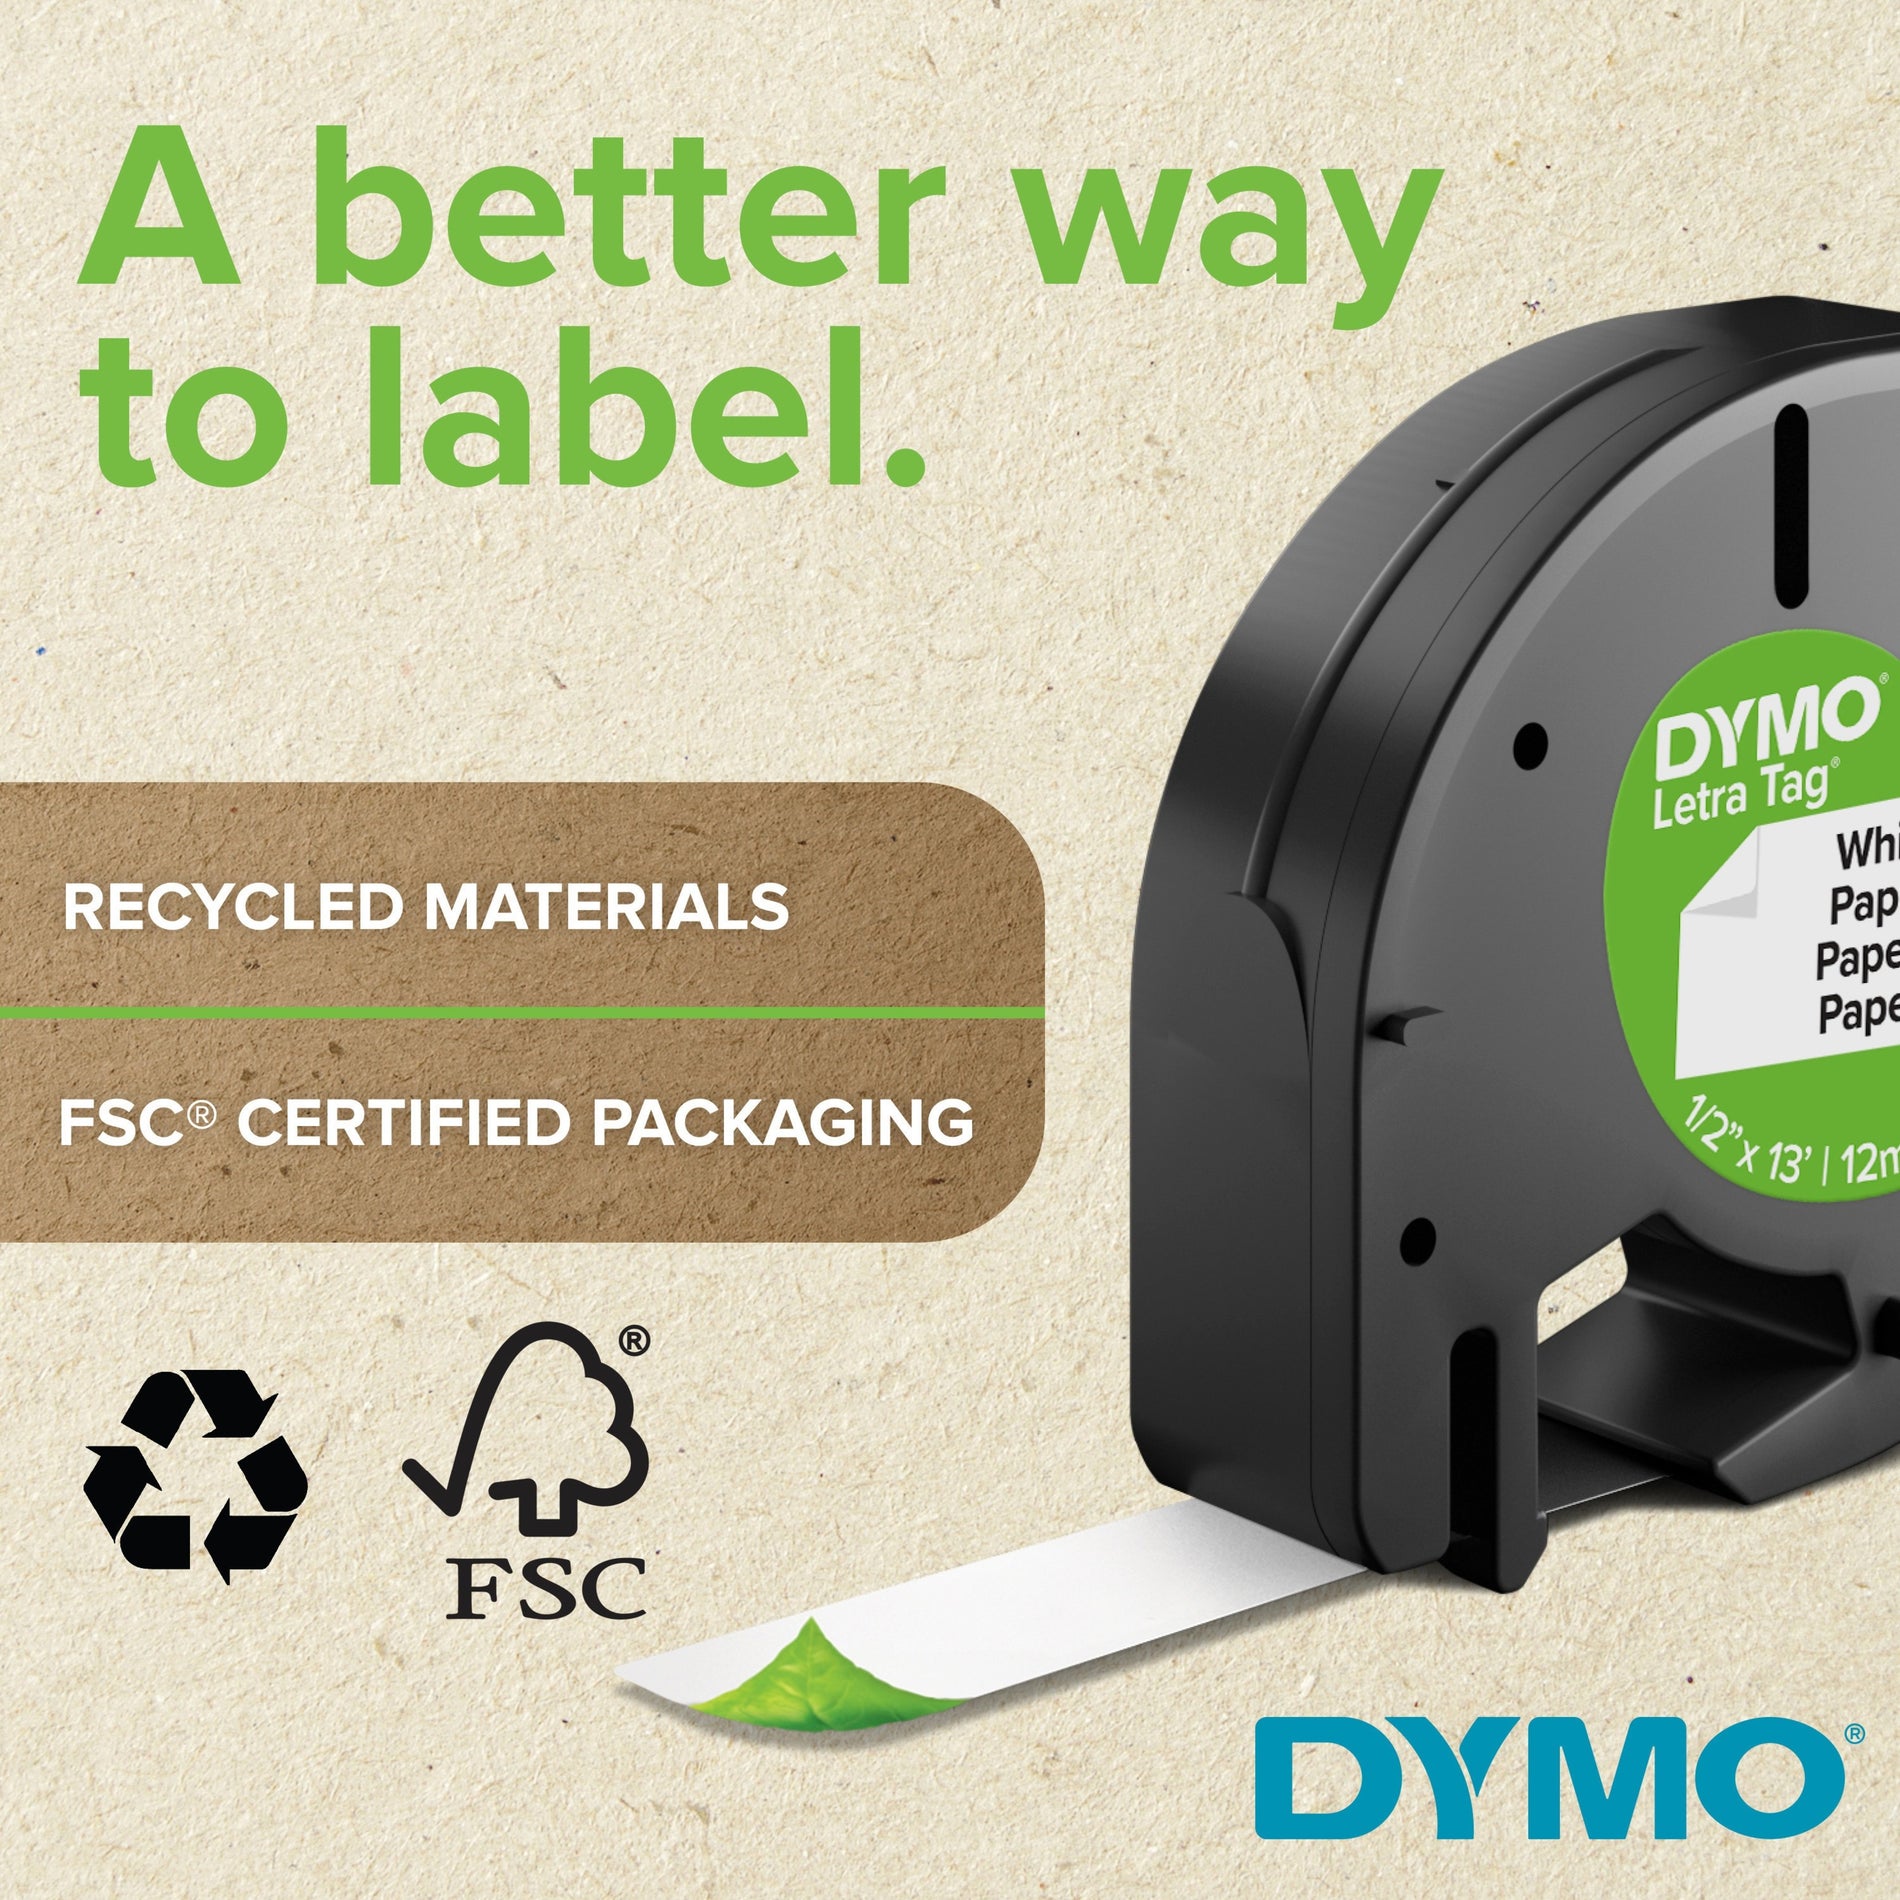 Dymo 1805436 Colored 3/4" Vinyl Label Tape, White/Black, Temperature Resistant, Chemical Resistant, Corrosion Resistant